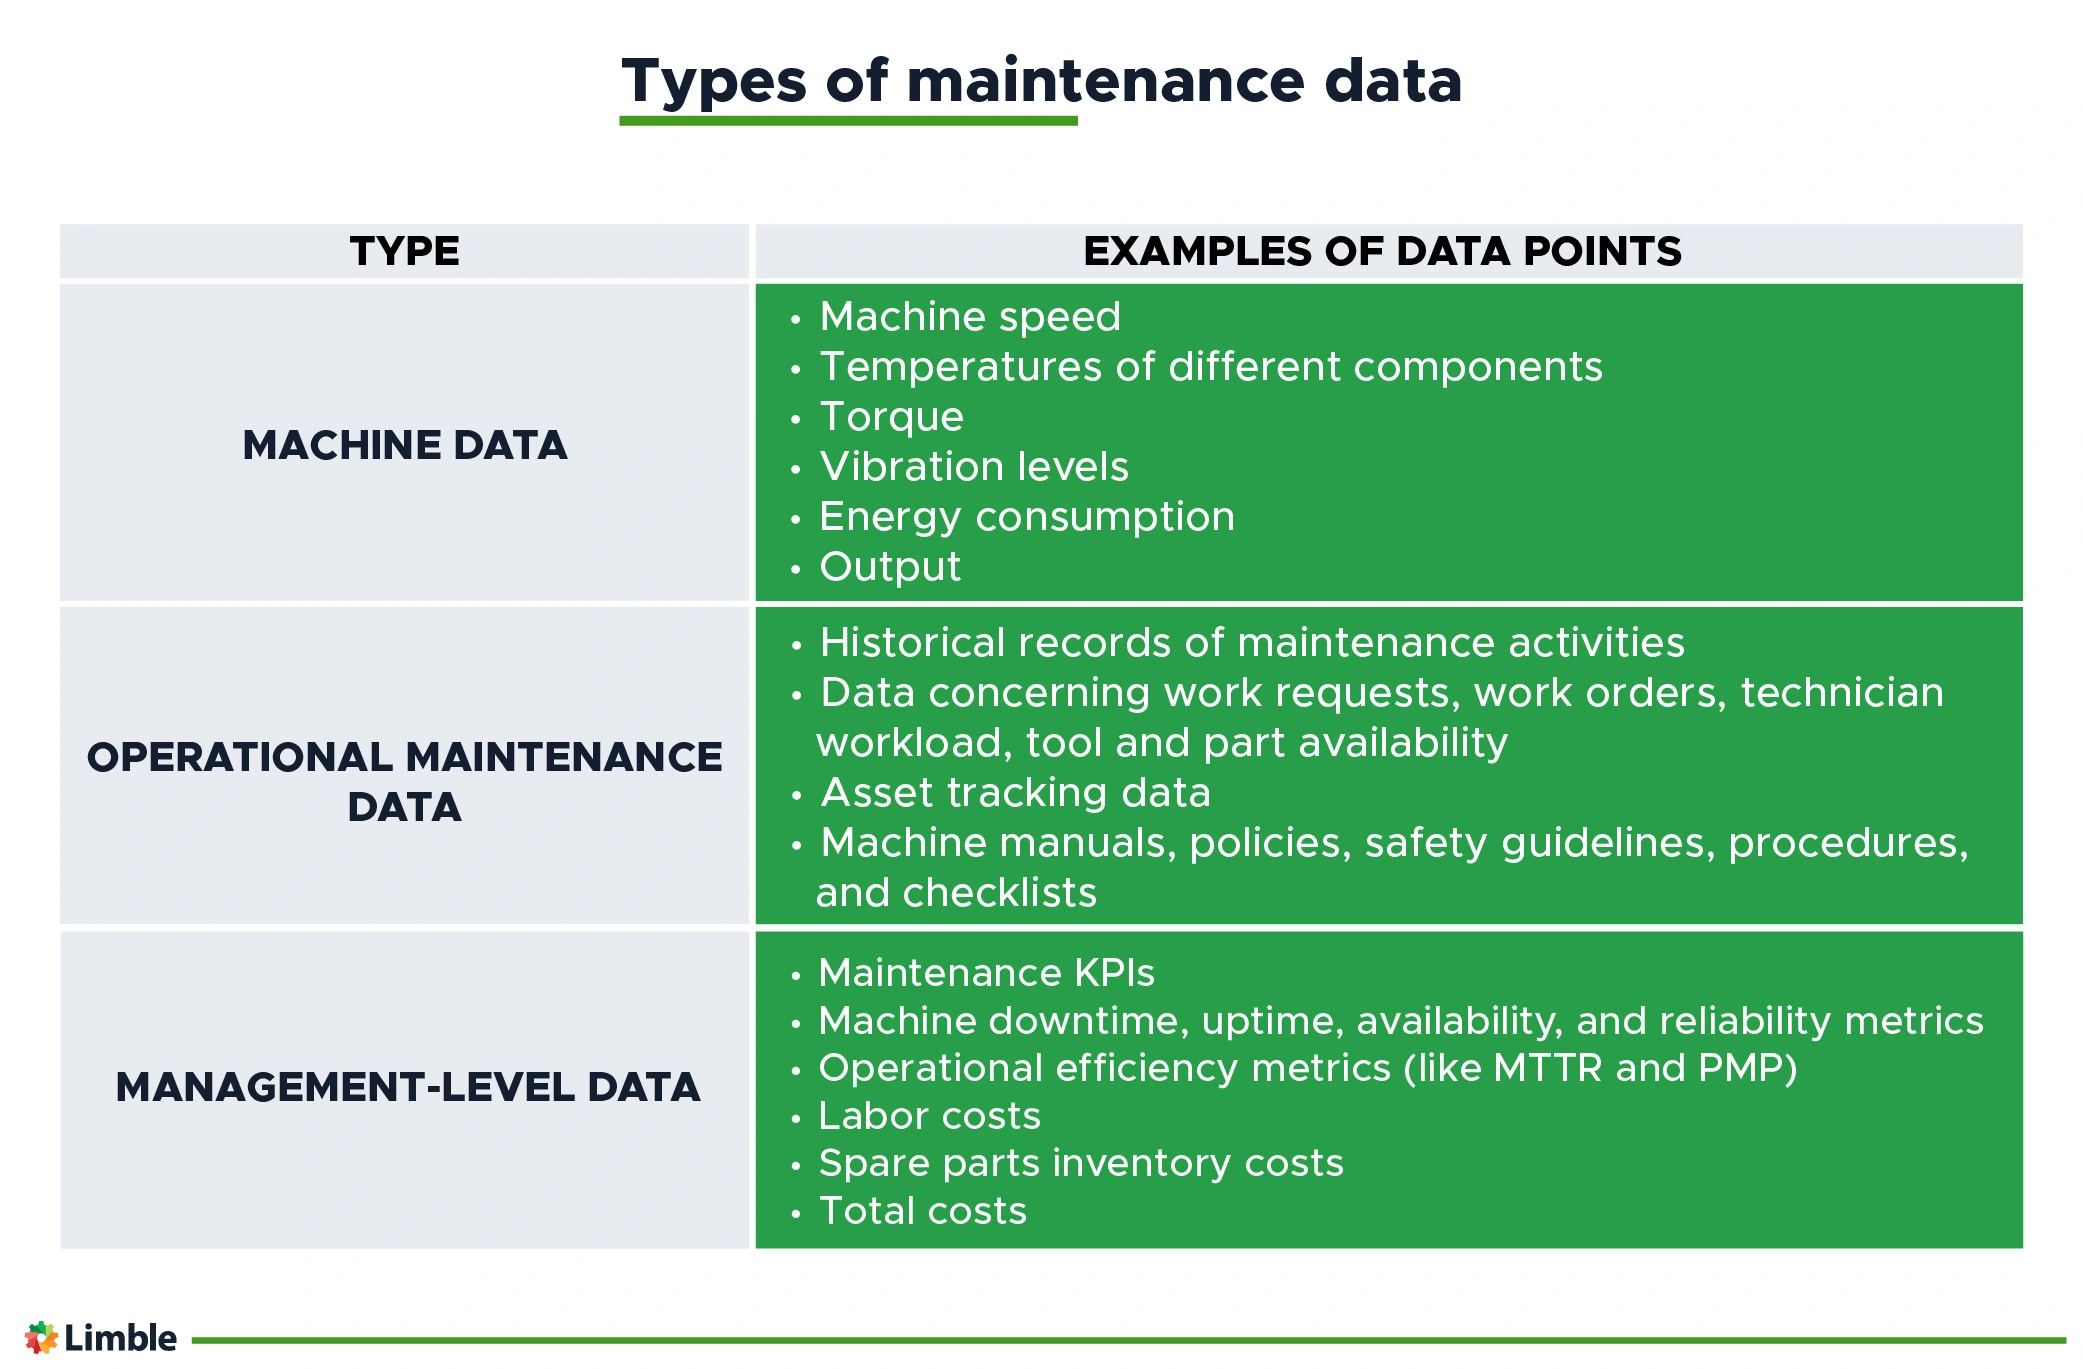 Types of maintenance data